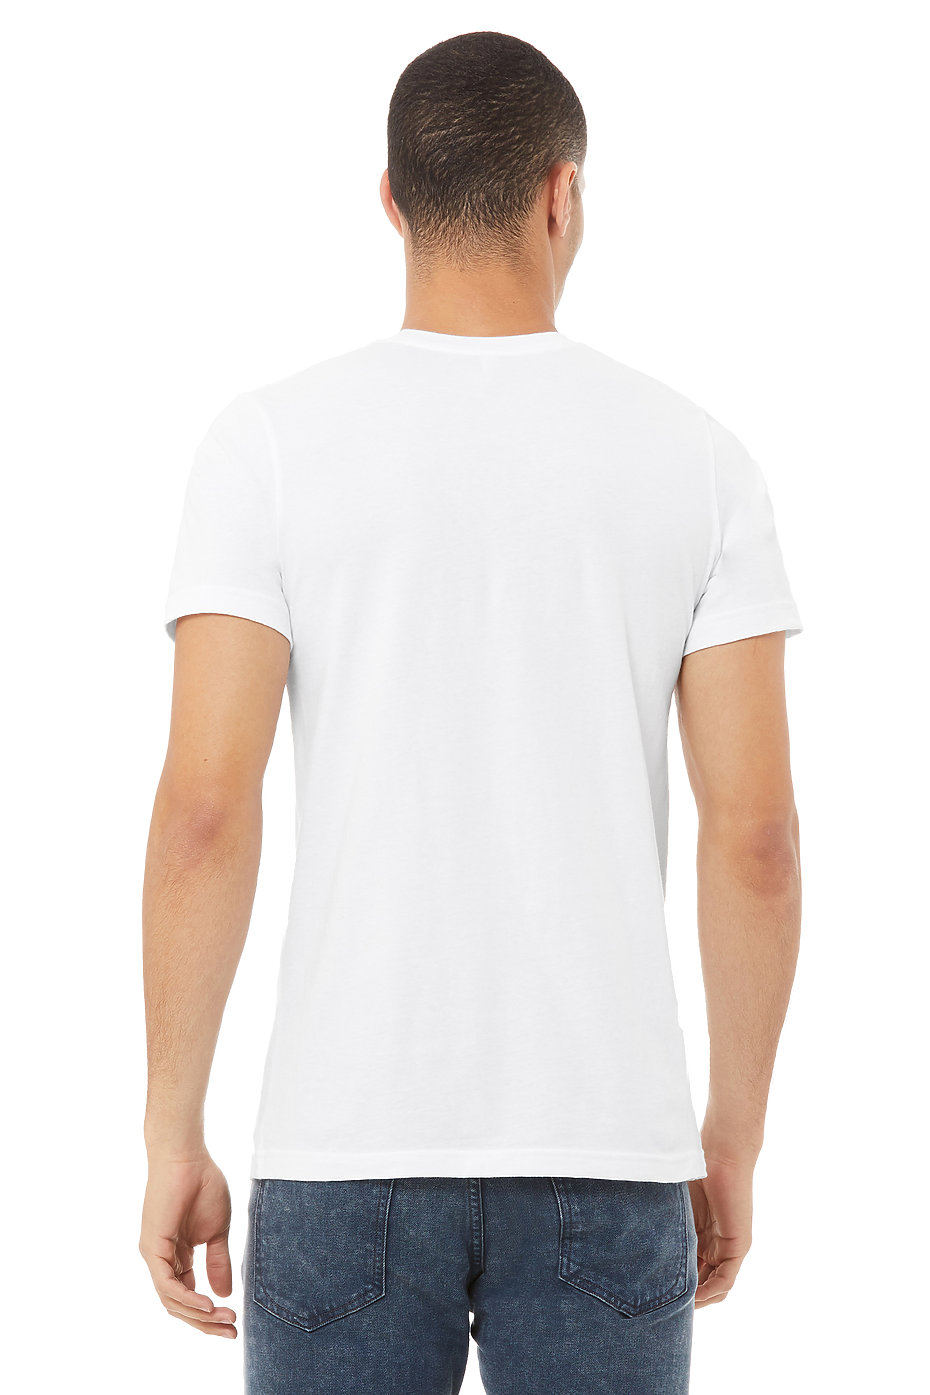 Bella + Canvas Unisex Jersey T-Shirt - Omega Custom Tackle